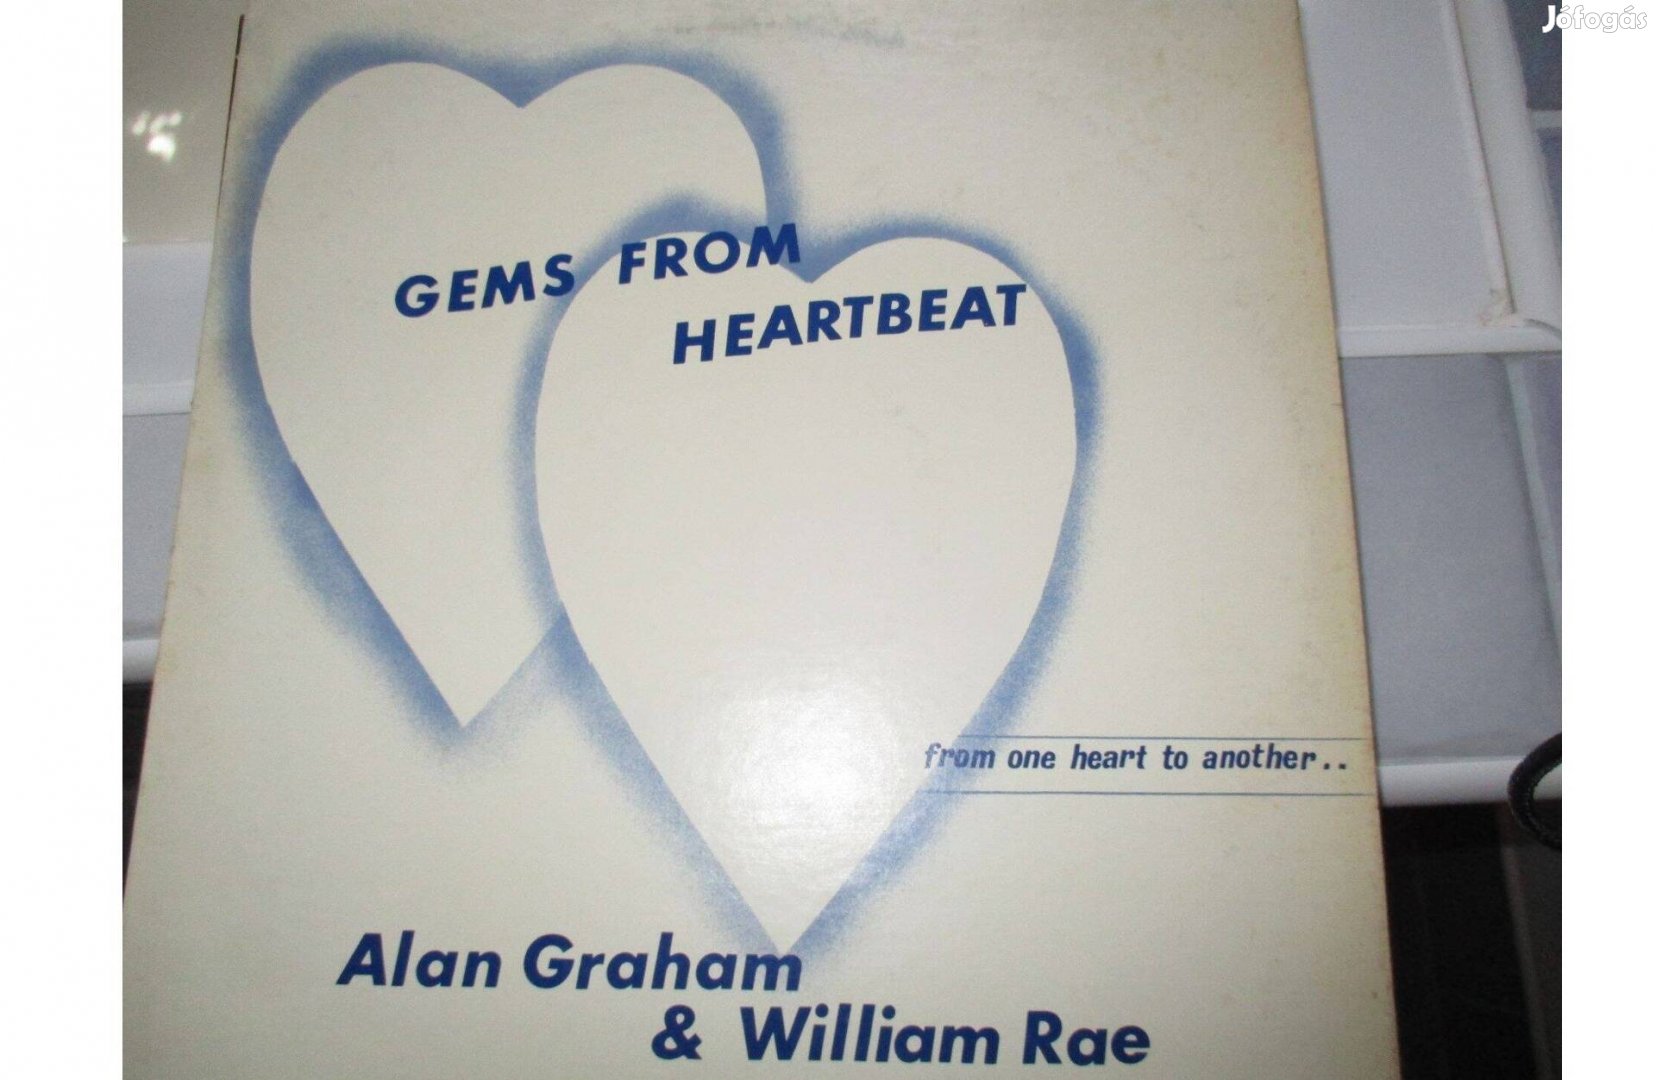 Alan Graham & William Rae bakelit hanglemez eladó